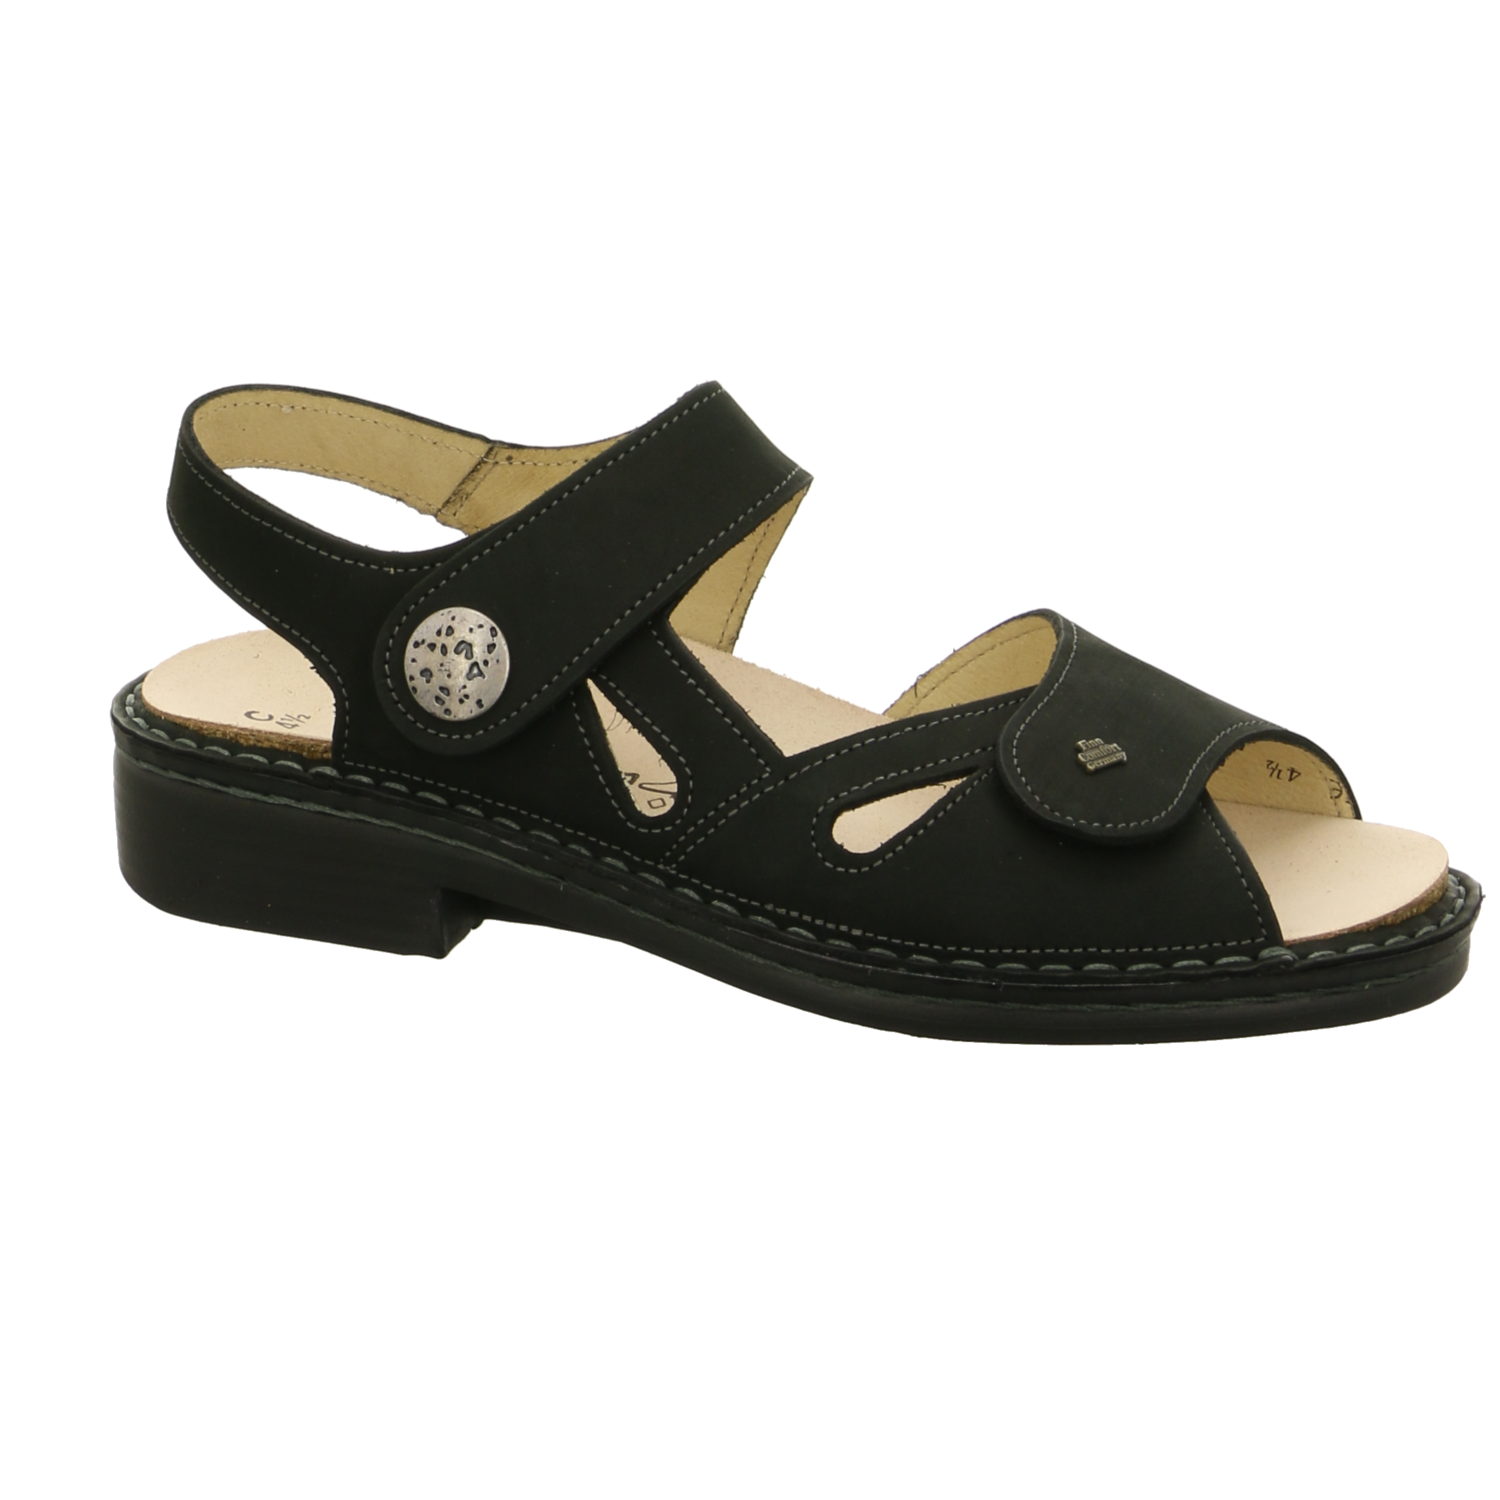 FinnComfort Comfort-Sandalette schwarz